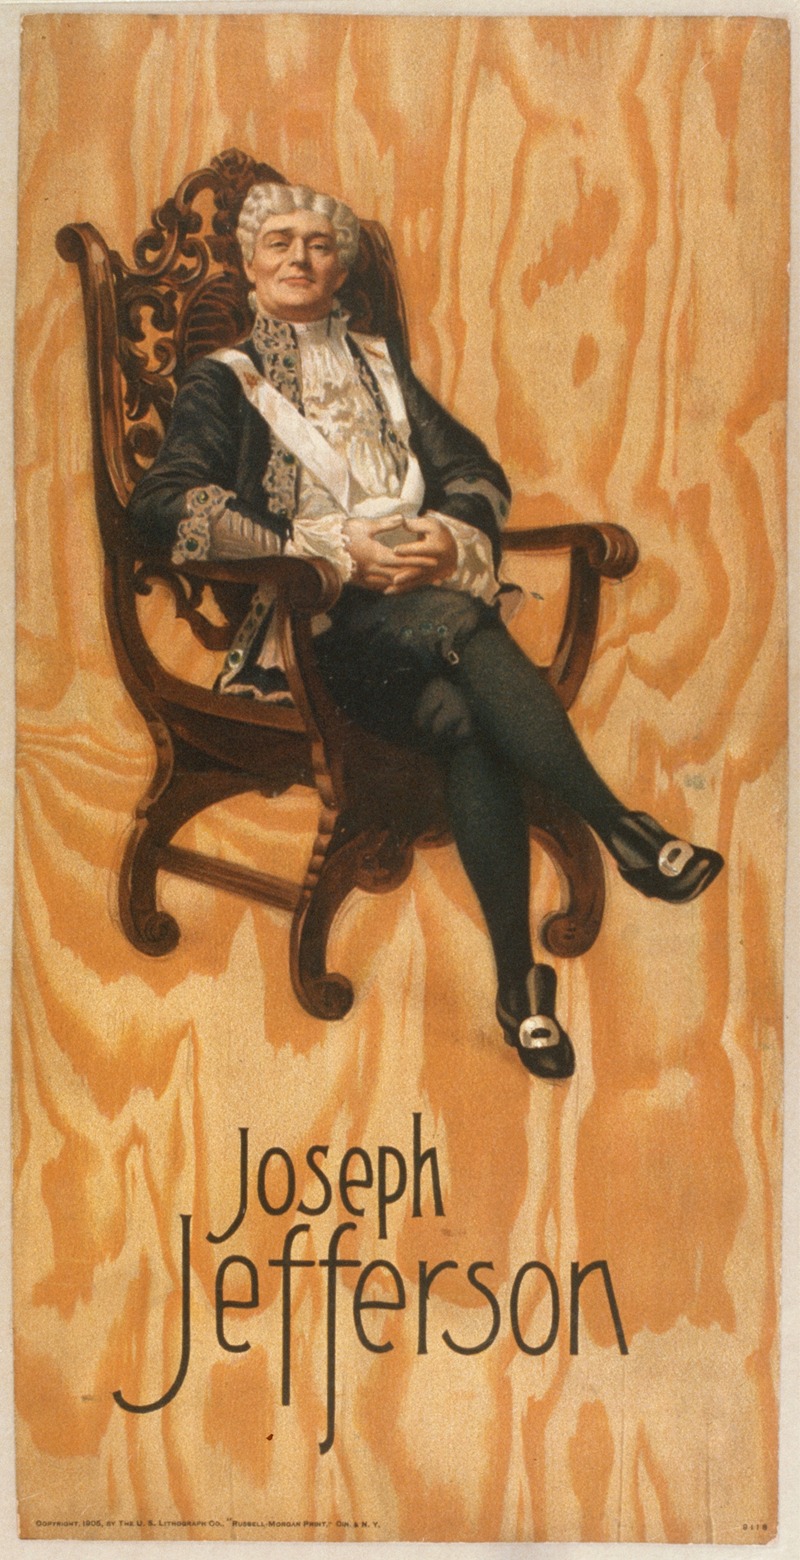 U.S. Lithograph Co. - Joseph Jefferson